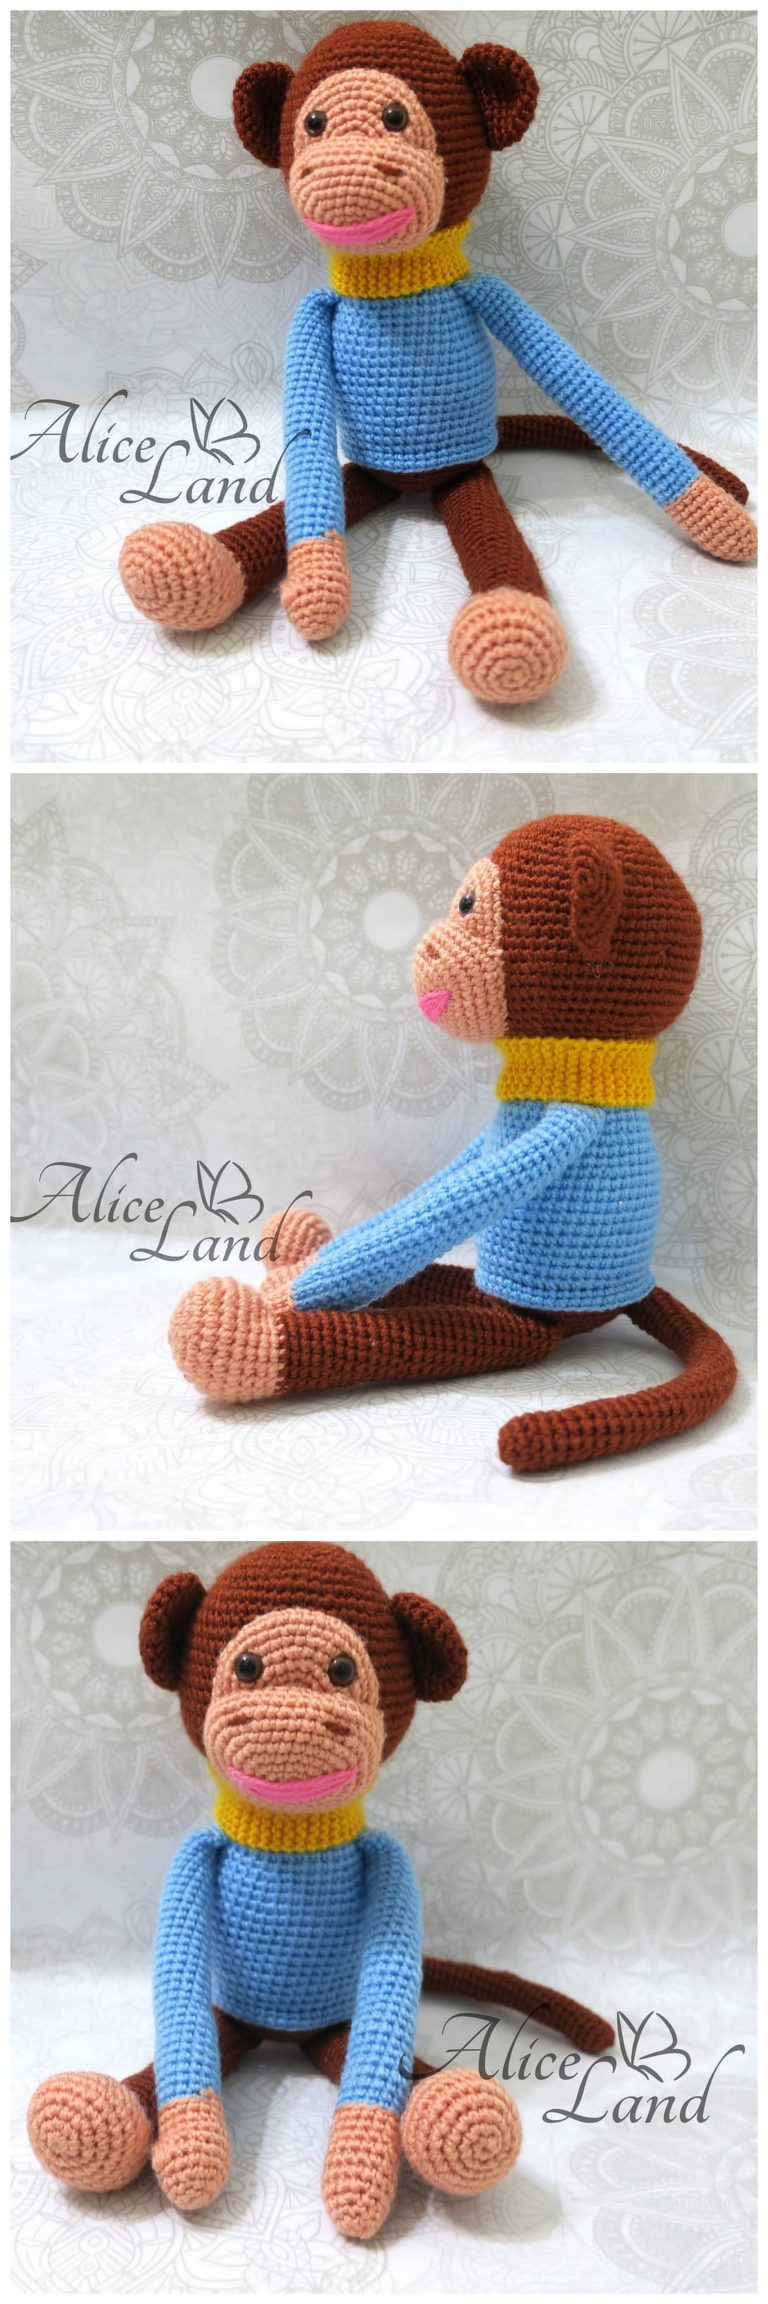 Amigurumi Doll And Animal Designer Aliceland Crochet Patterns